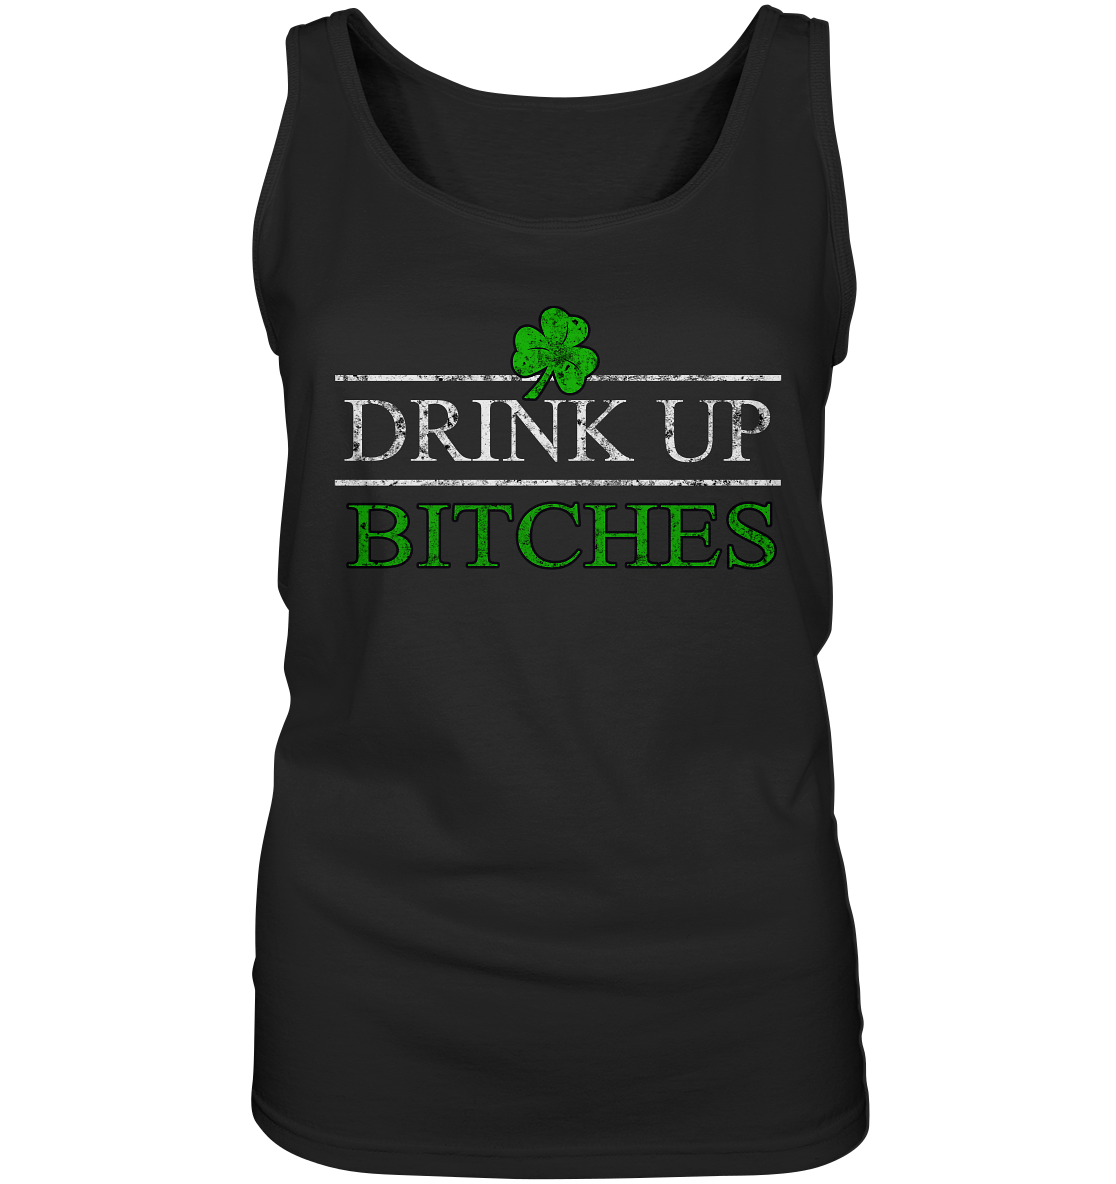 Drink Up "Bitches" - Ladies Tank-Top